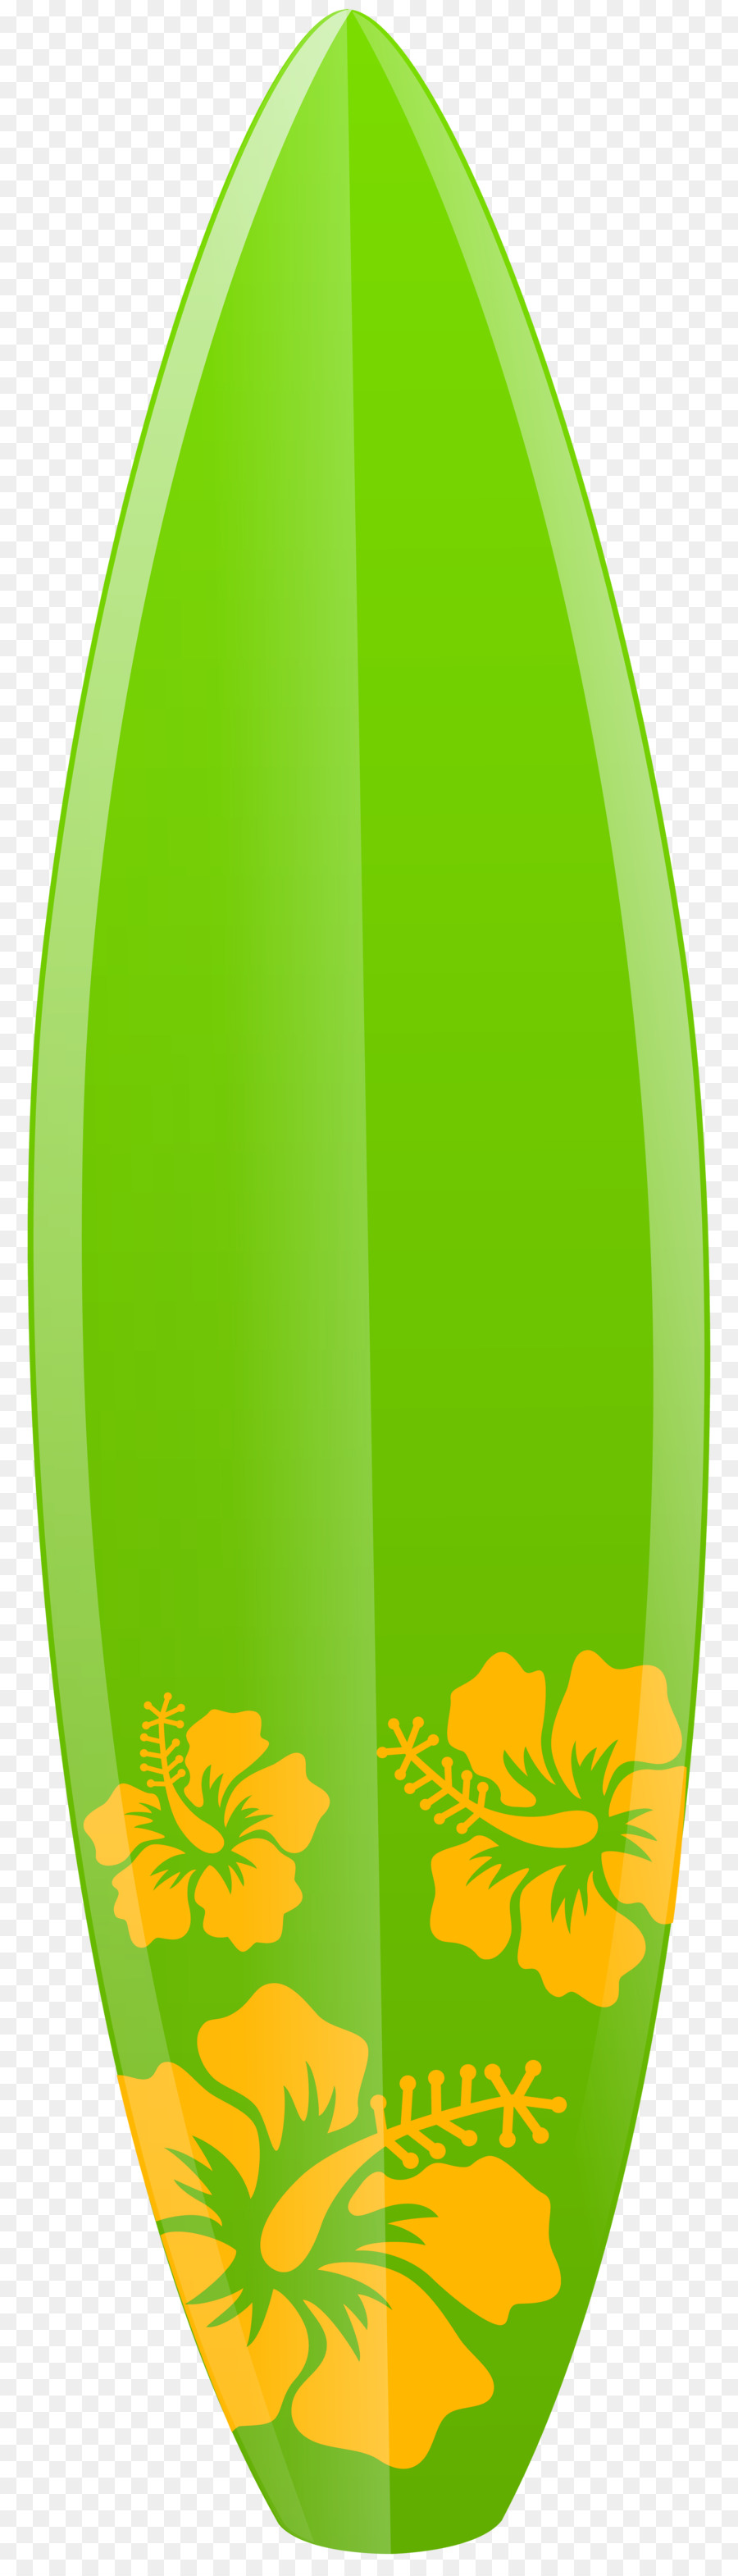 Surfboard Surfing Clip art - surfboard png download - 2299*8000 - Free Transparent Surfboard png Download.